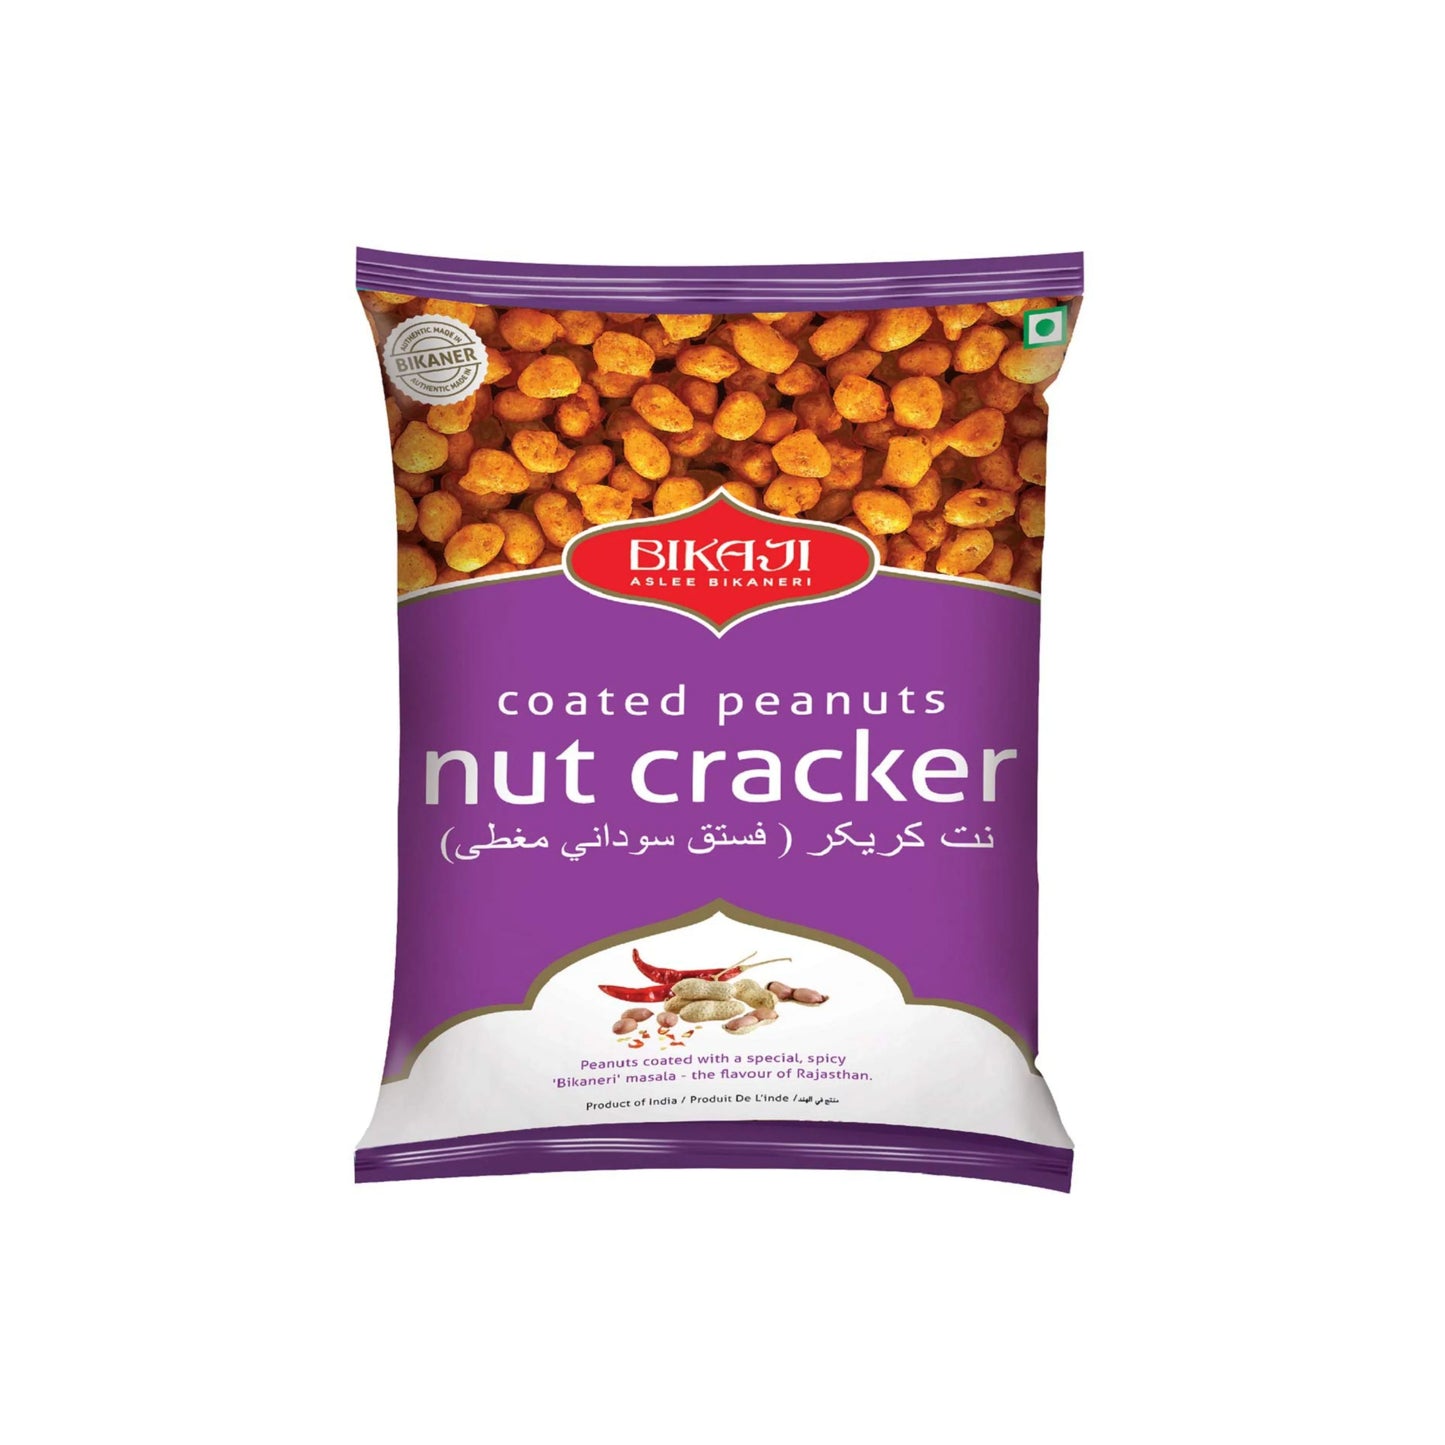 Bikaji's Nutcrackers